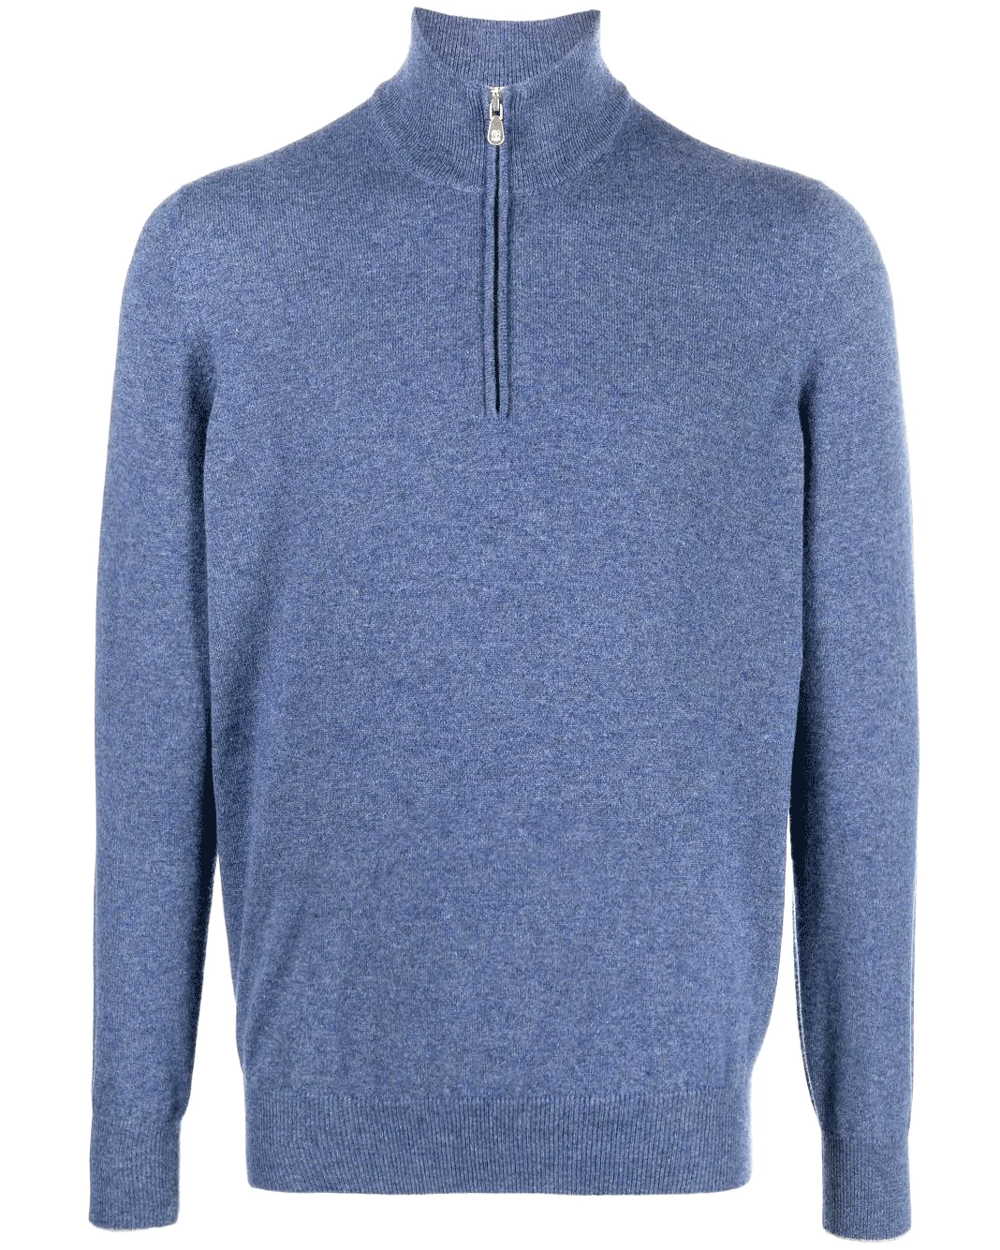 Oxford Blue Cashmere Quarter Zip Sweater